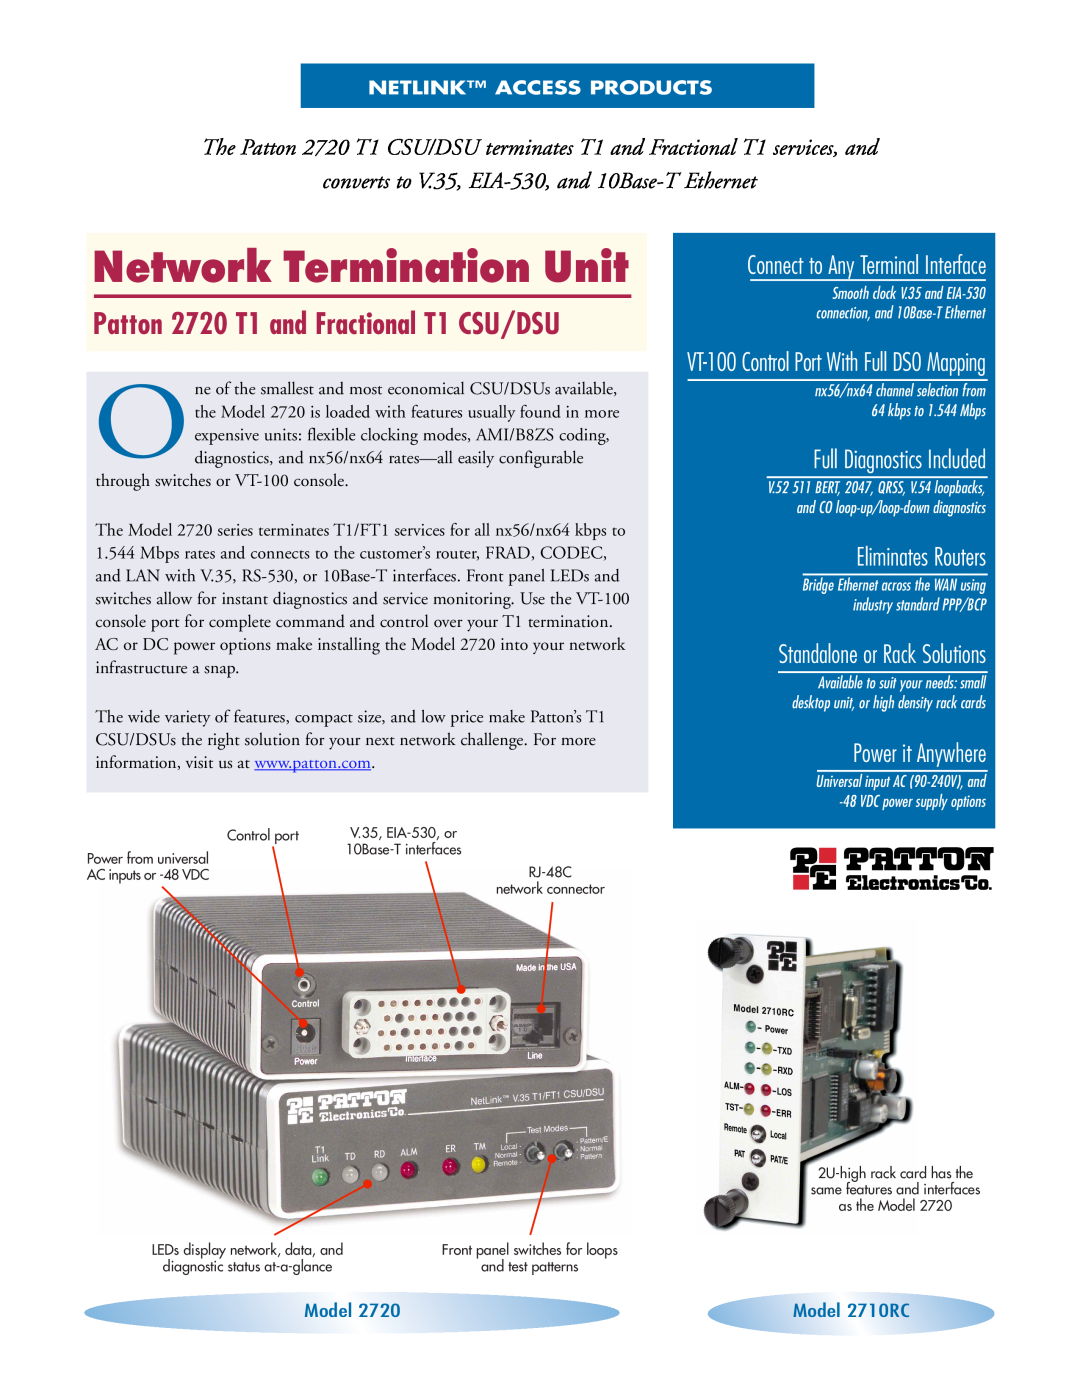 Patton electronic manual Network Termination Unit, Patton 2720 T1 and Fractional T1 CSU/DSU, Eliminates Routers, Model 